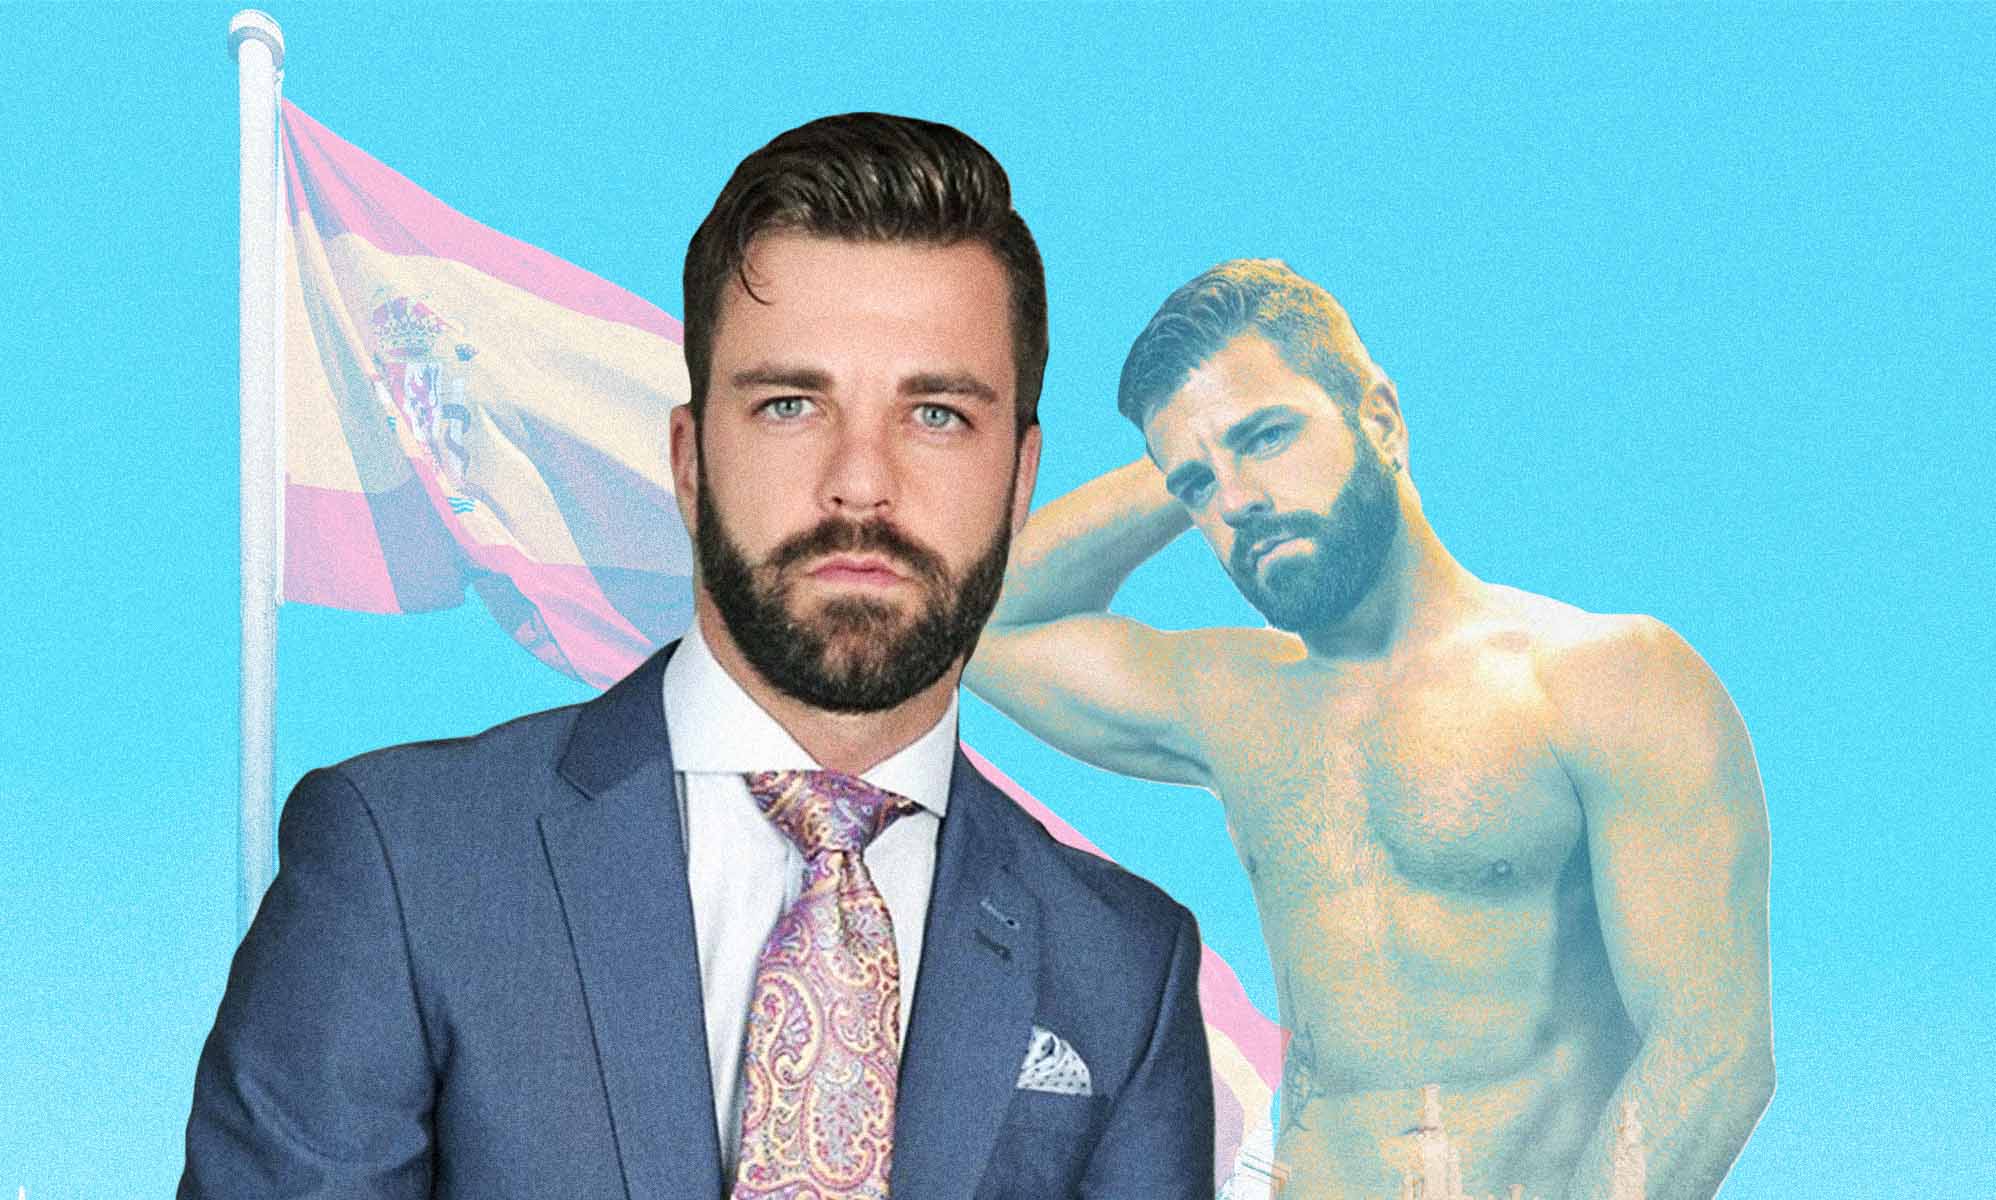 Ex-gay porn star Antonio Moreno runs for mayor of Spanish town pic